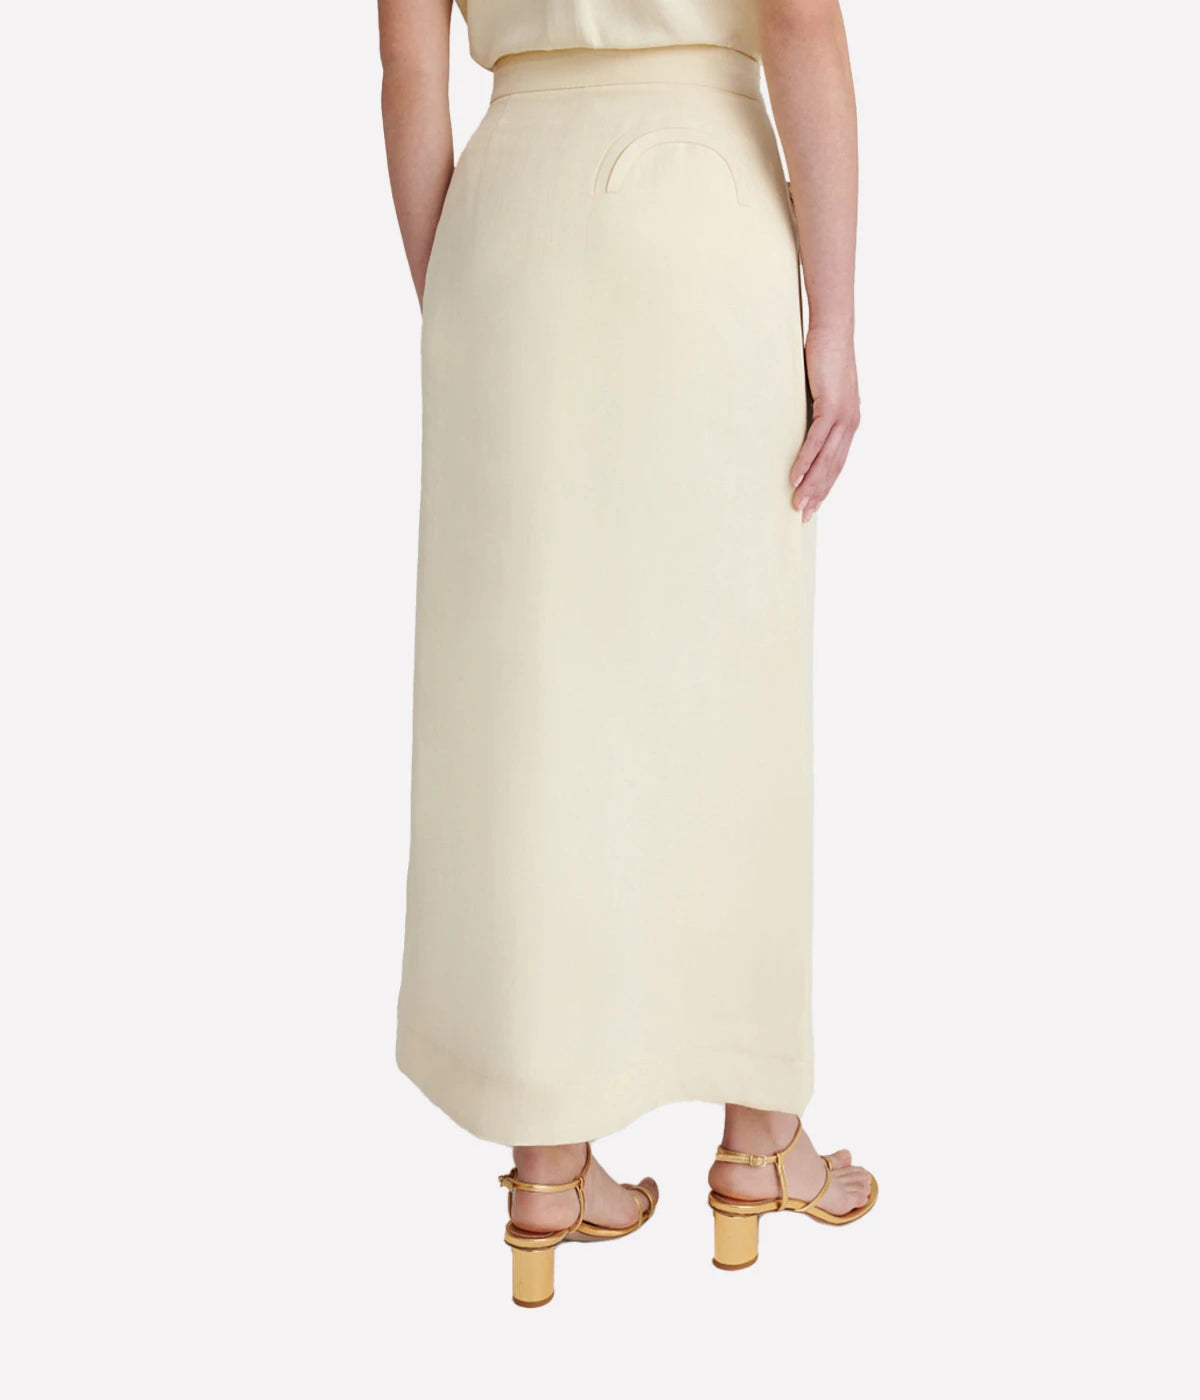 Savannah Appaloosa Skirt in Butter